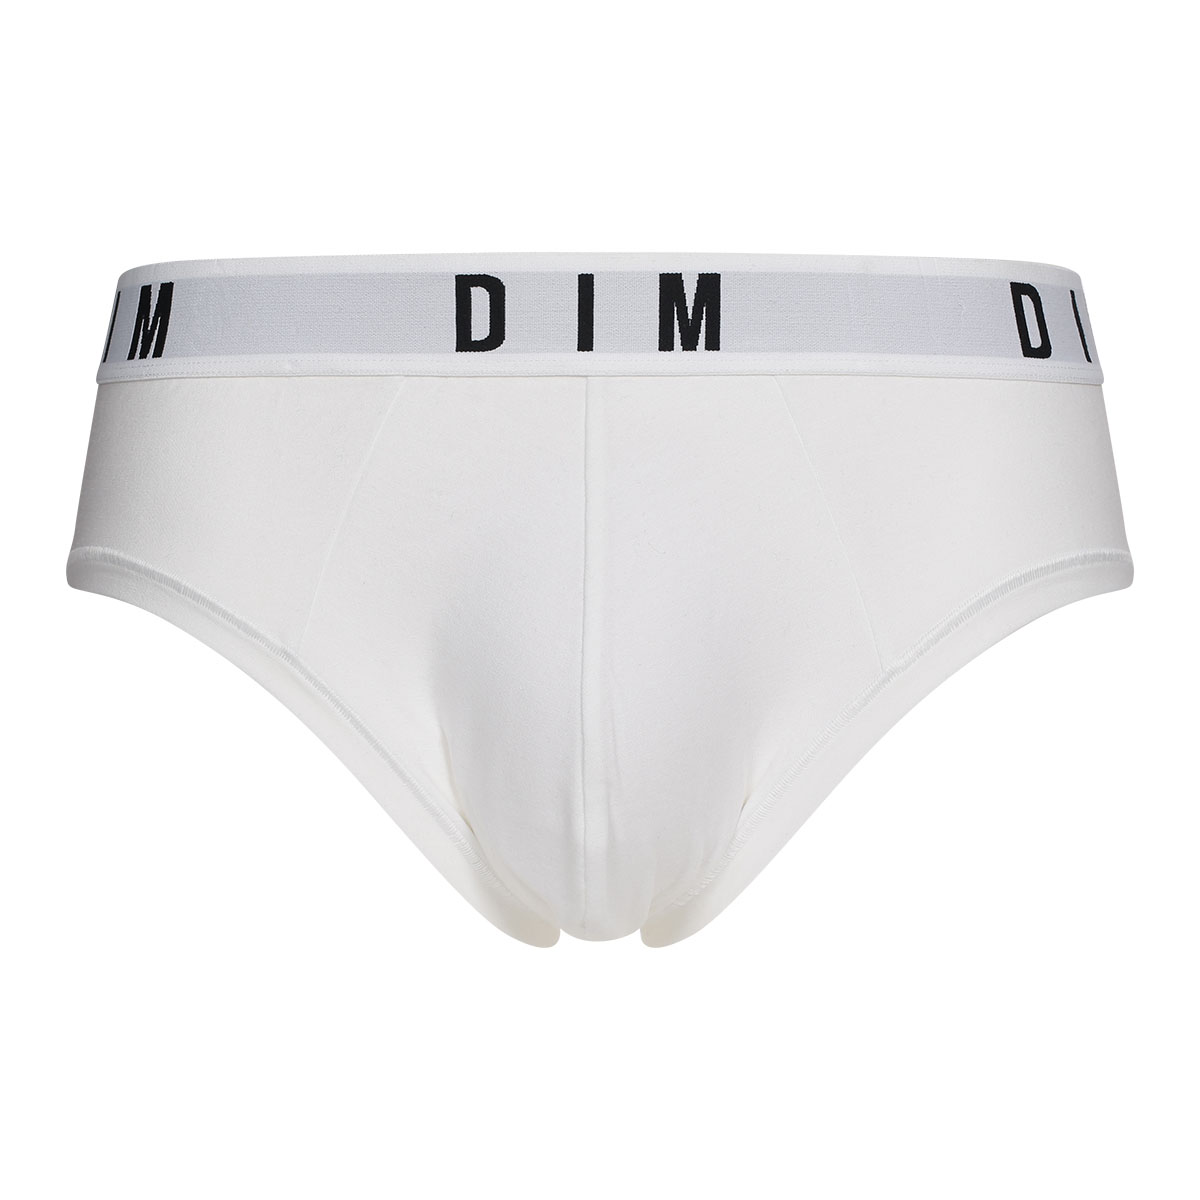 Dim Originals men's modal cotton briefs in white